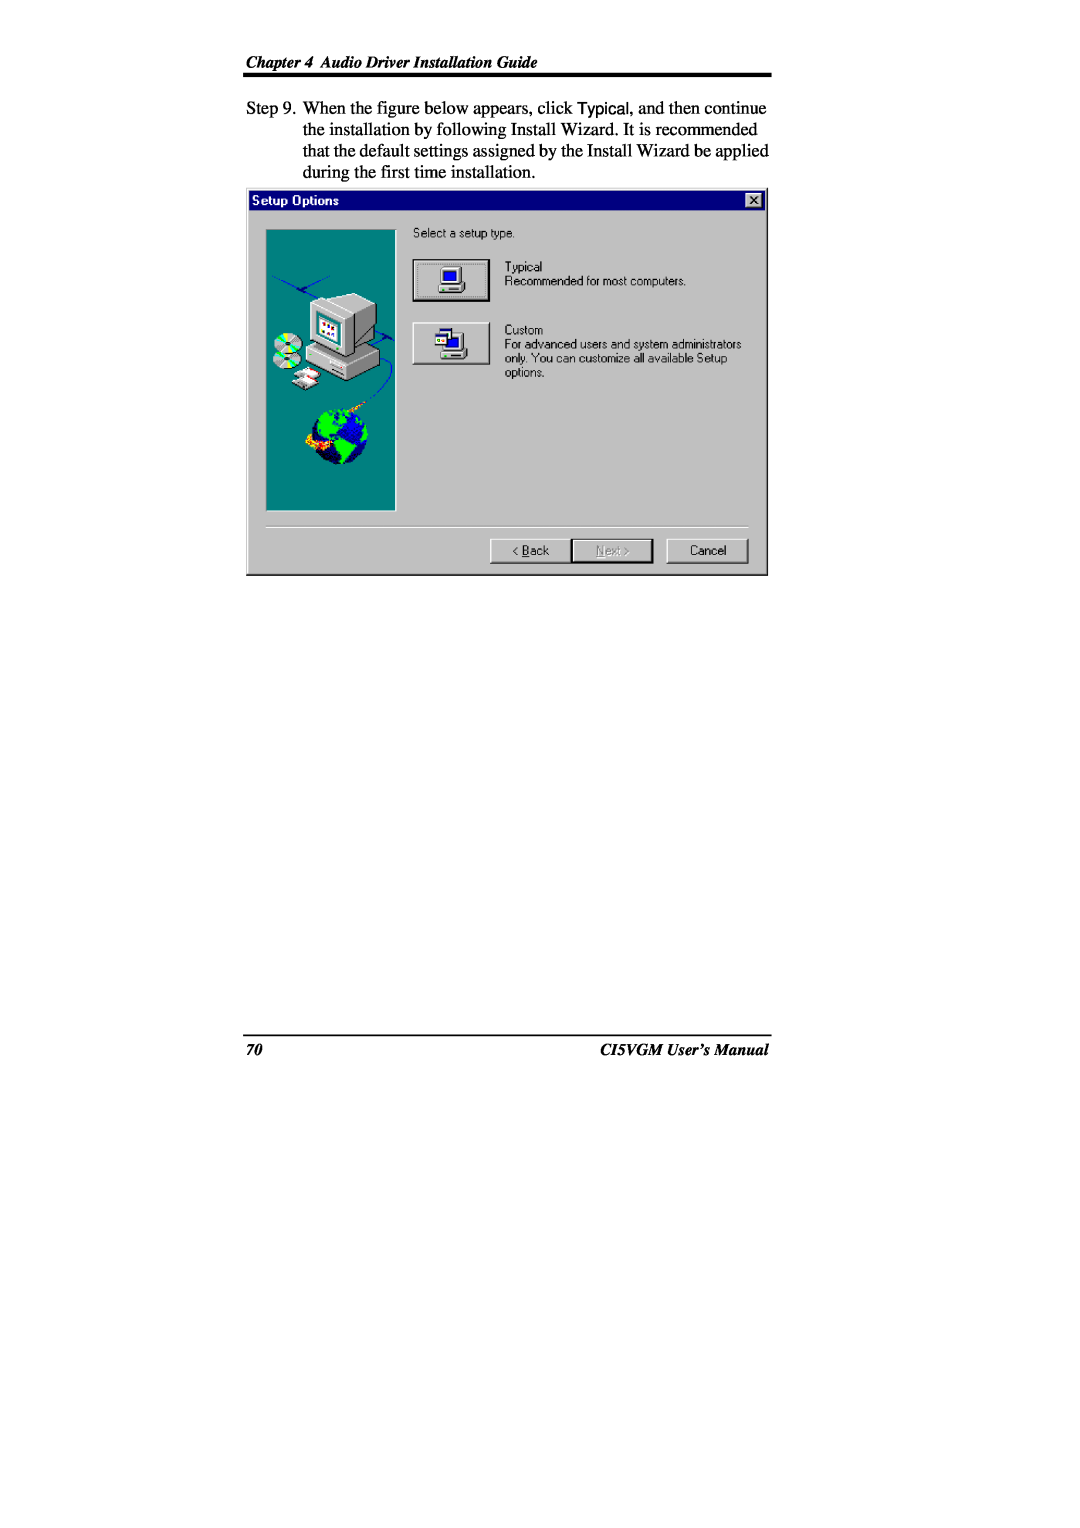 IBM CI5VGM Series user manual Audio Driver Installation Guide, CI5VGM User’s Manual 